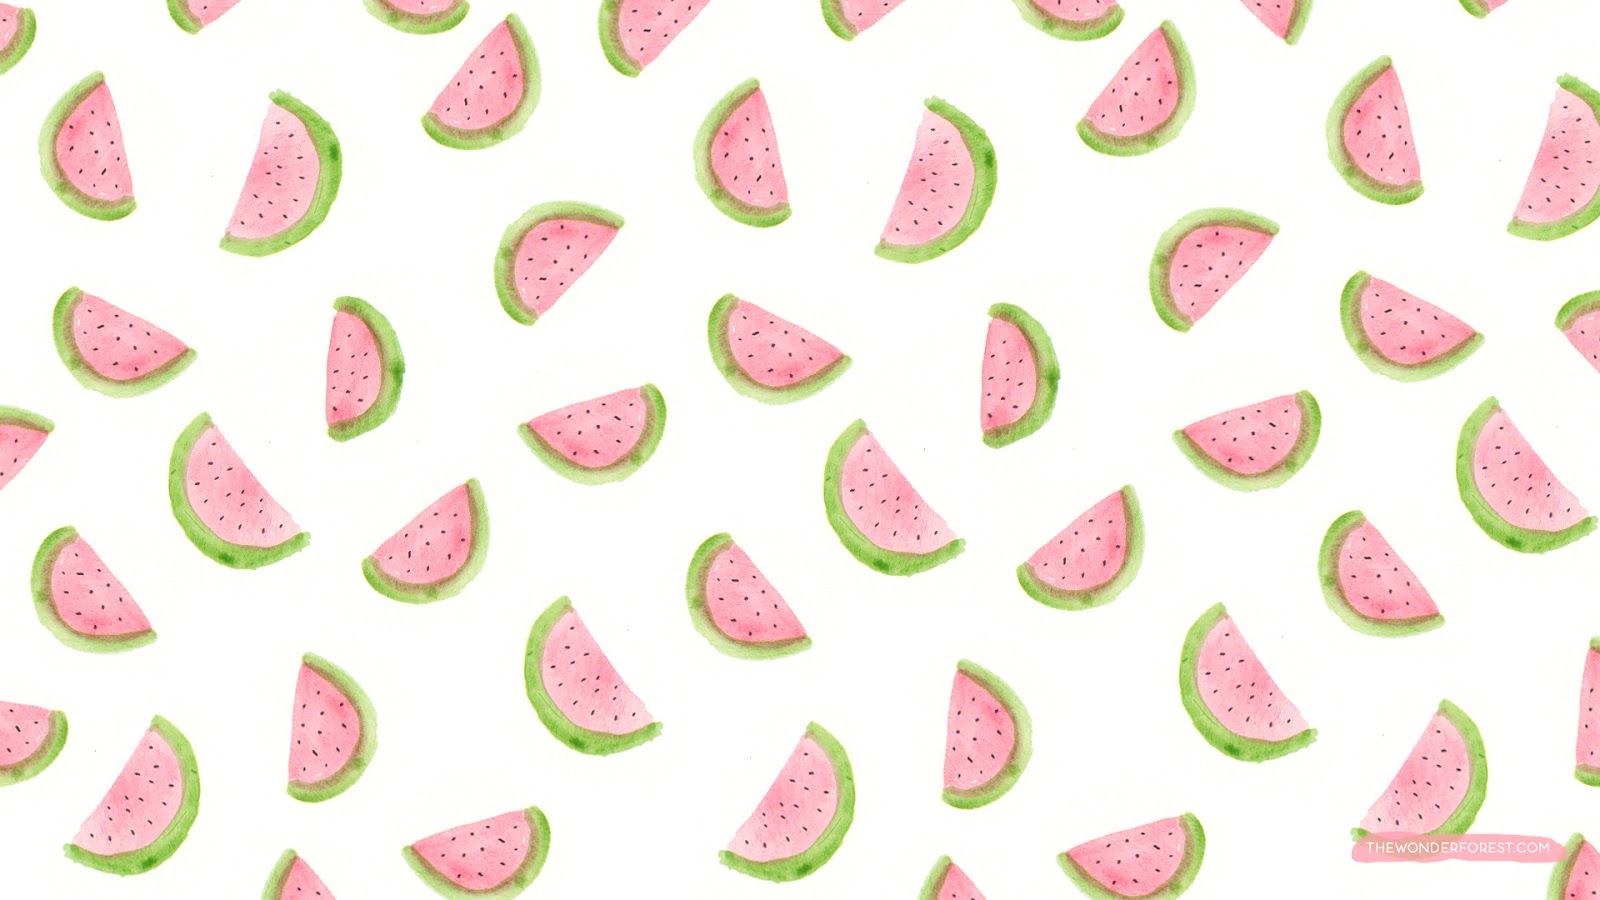 Watermelon Background Watermelon Wallpaper, Cartoon Watermelon Wallpaper and Cute Watermelon Background